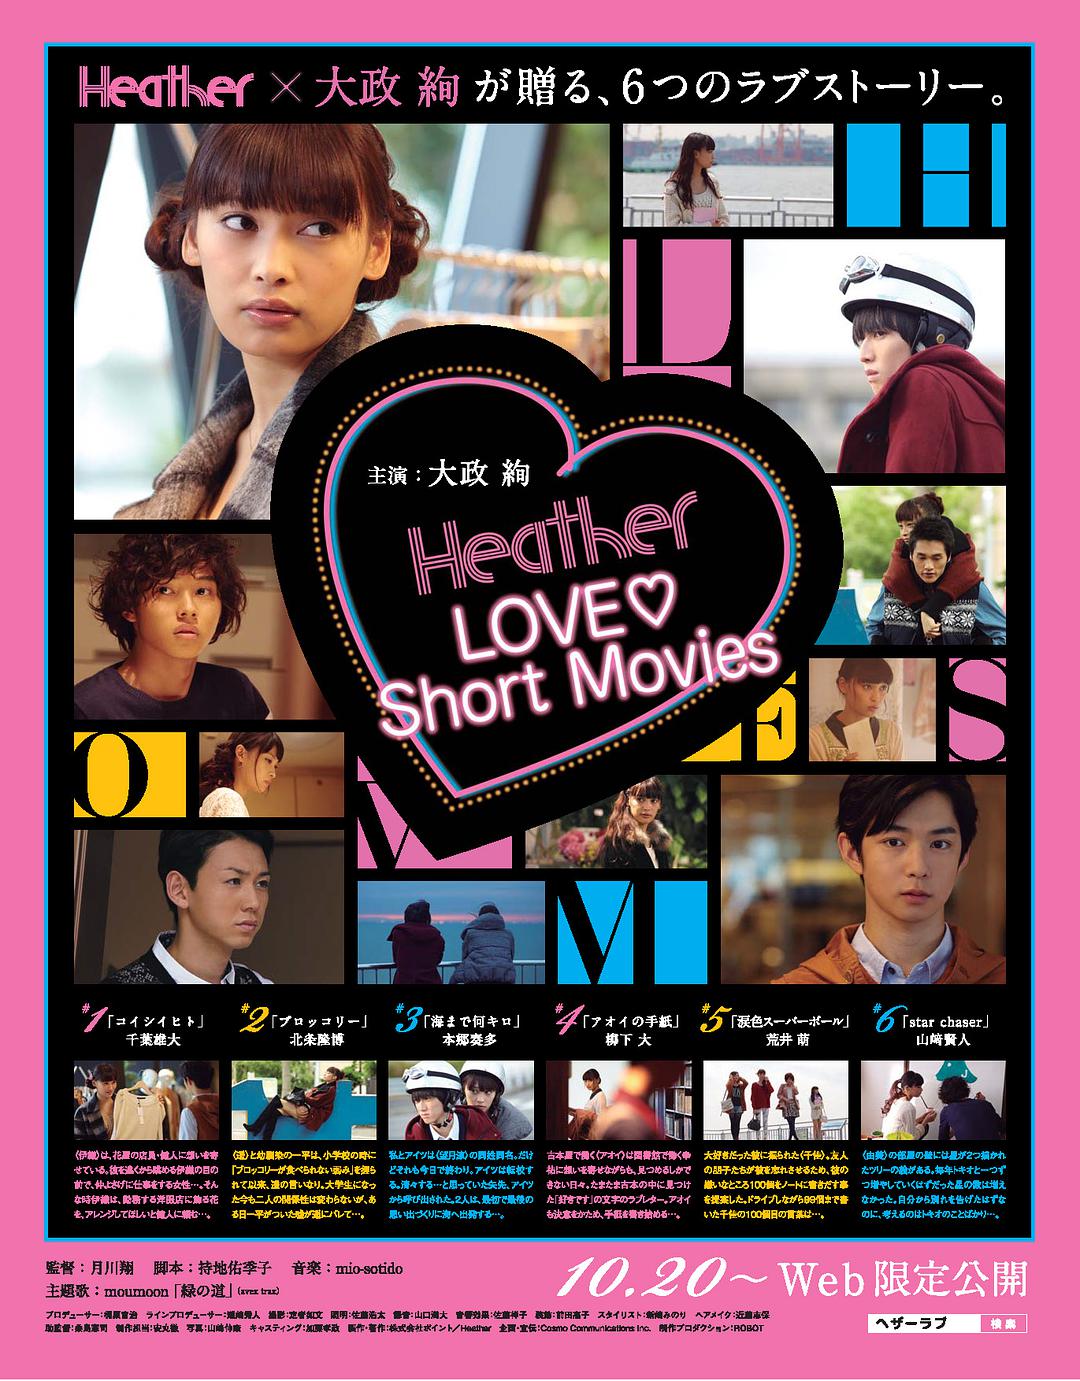 Heather LOVE?Short Movies